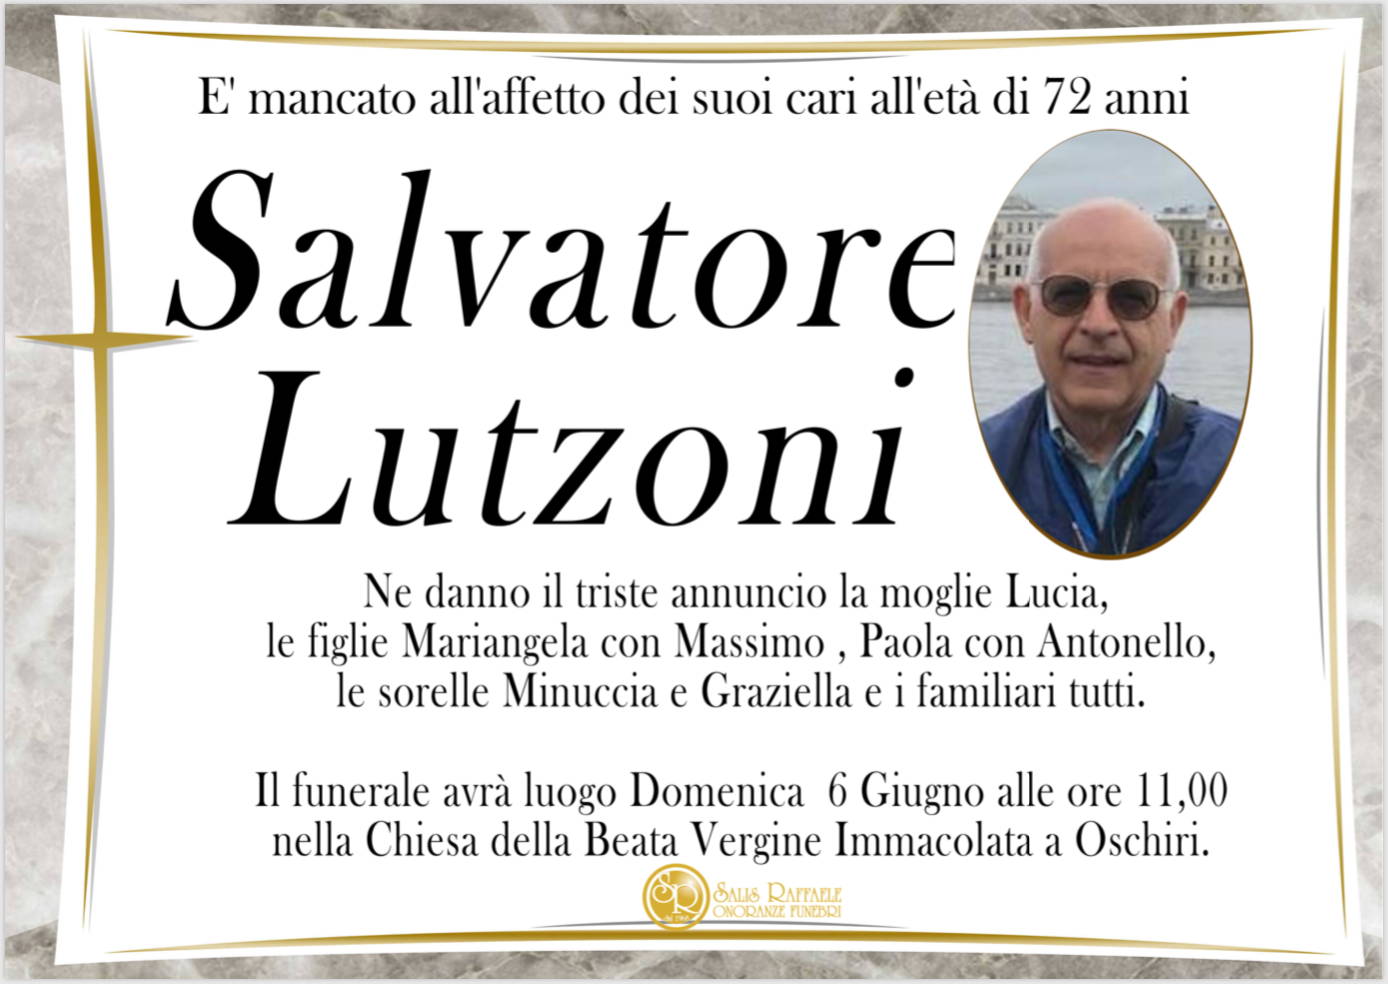 Salvatore Lutzoni